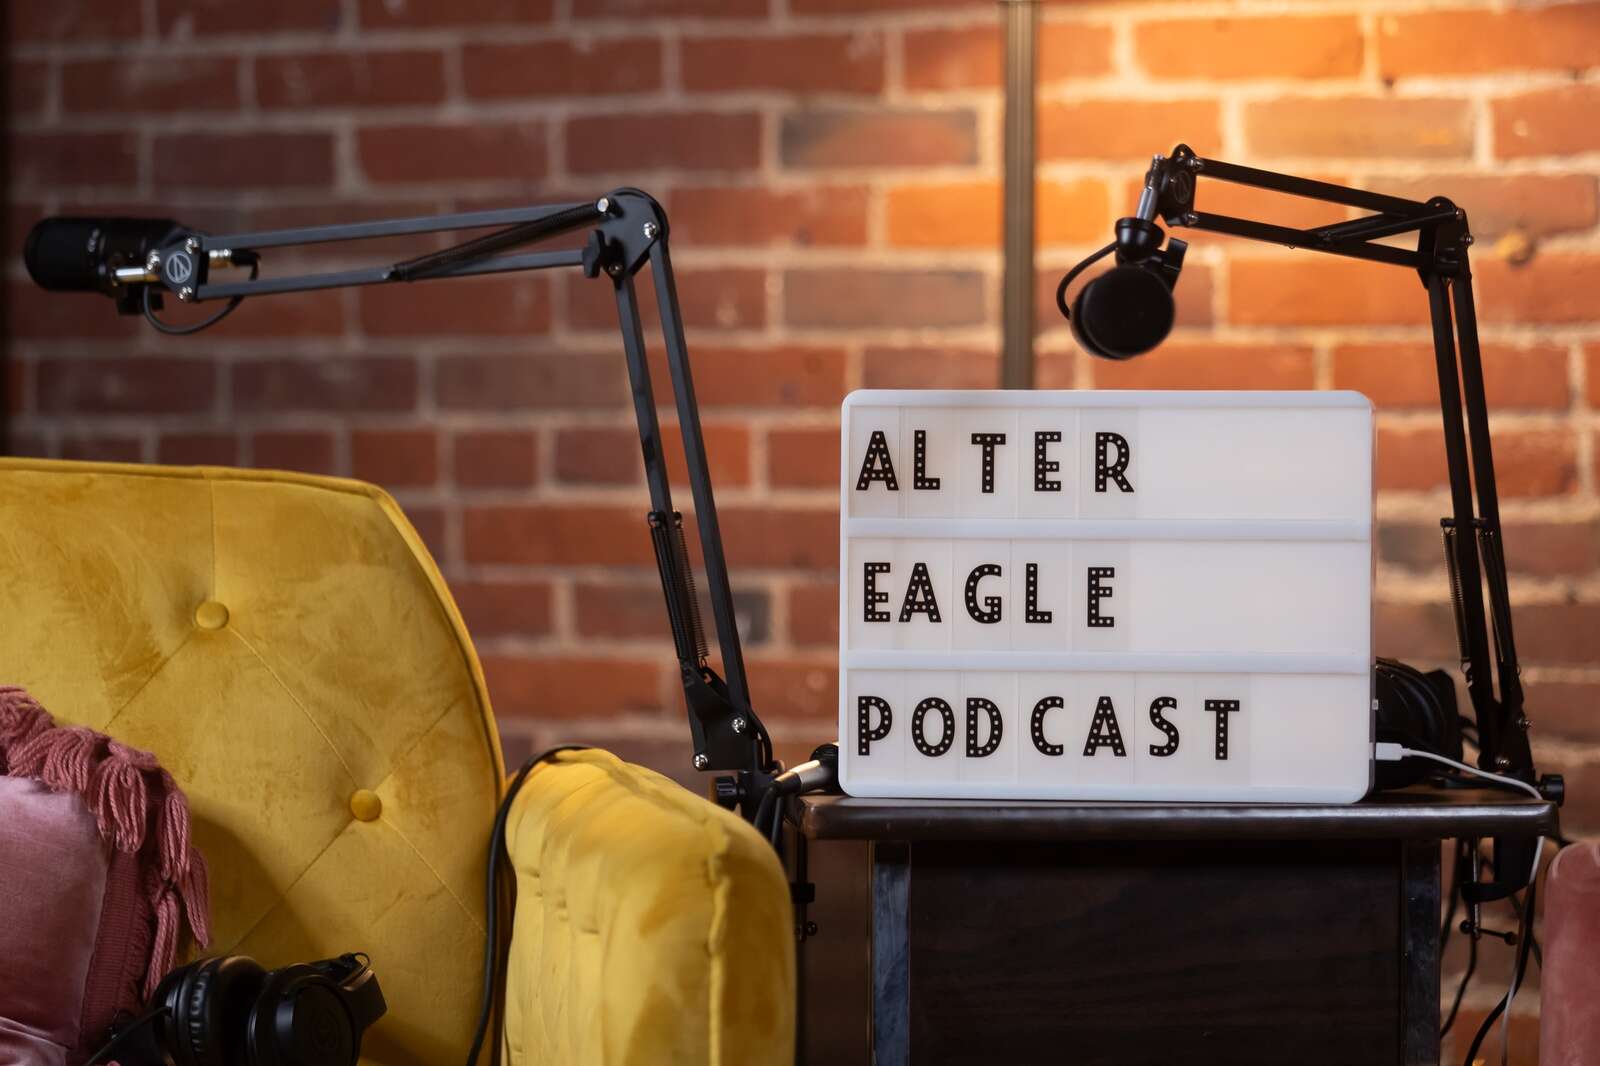 Alter Eagle Podcast sign